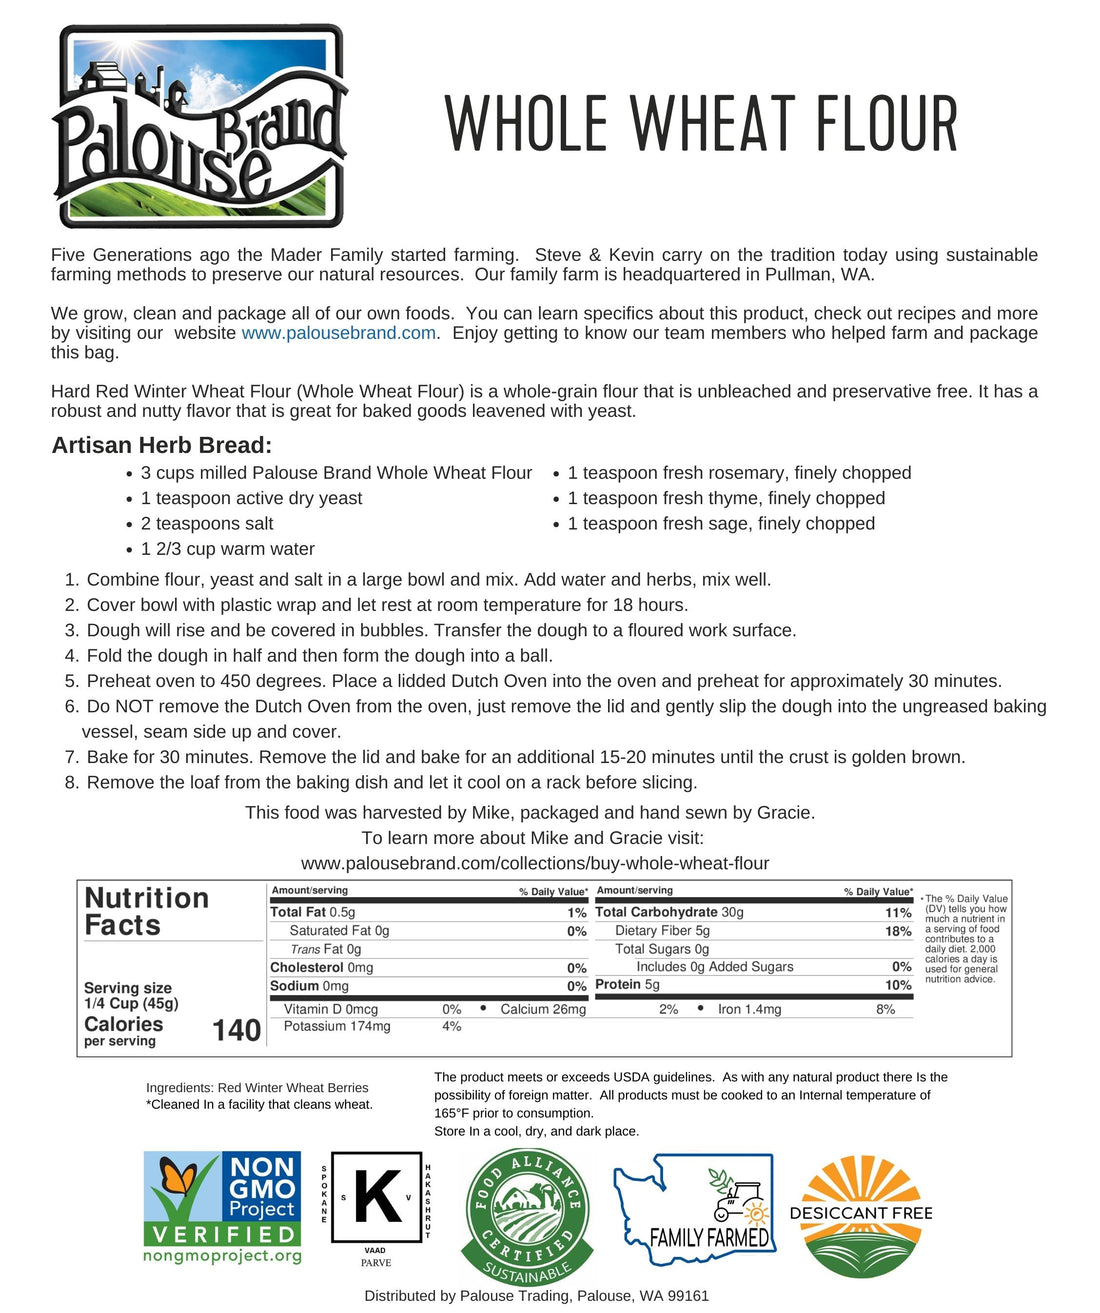 Whole Wheat Stone Ground Flour Pack | 9 LBS